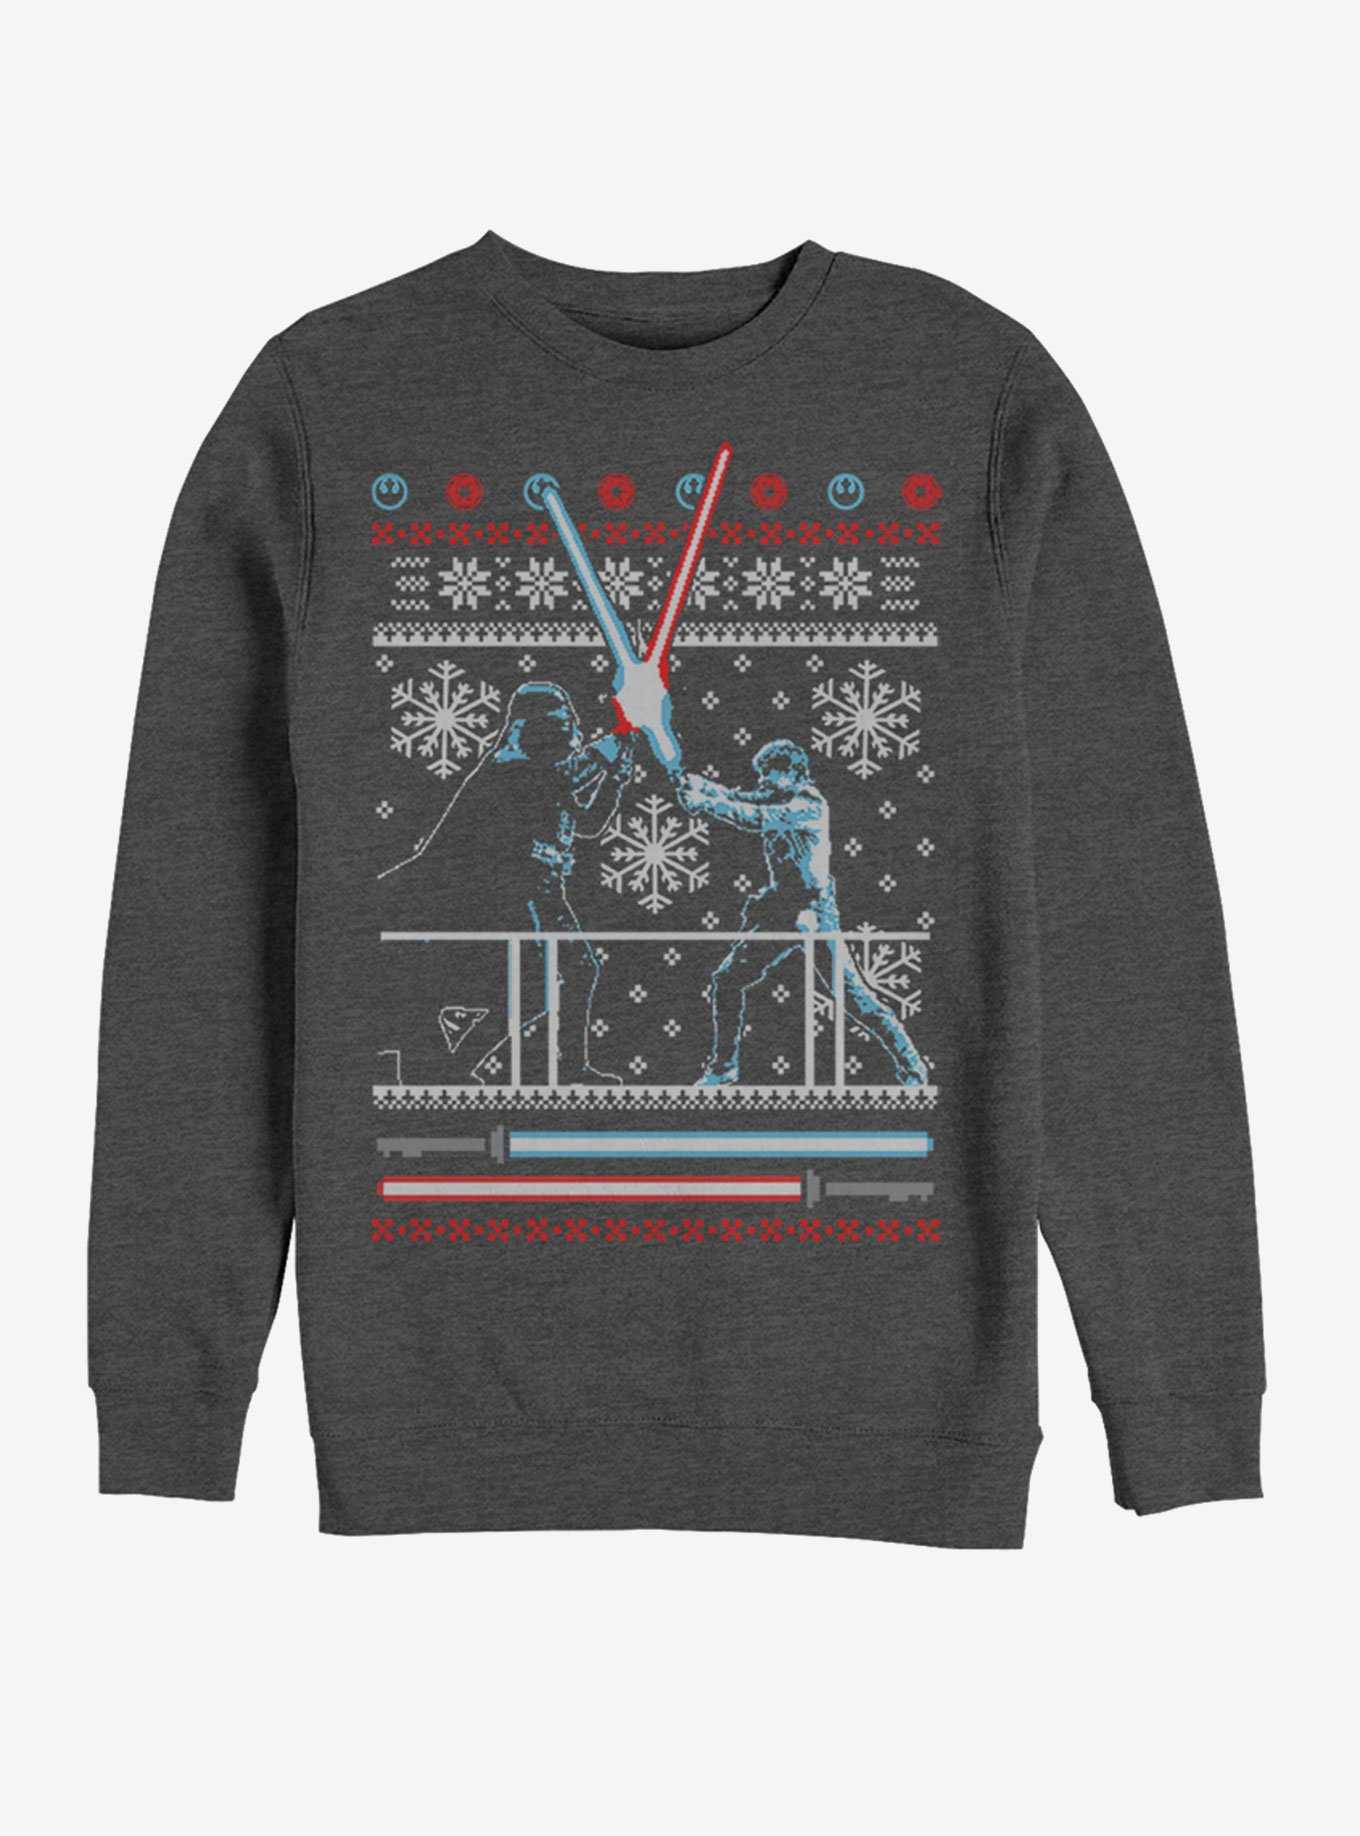 Star Wars Ugly Christmas Sweater Duel Girls Sweatshirt, , hi-res